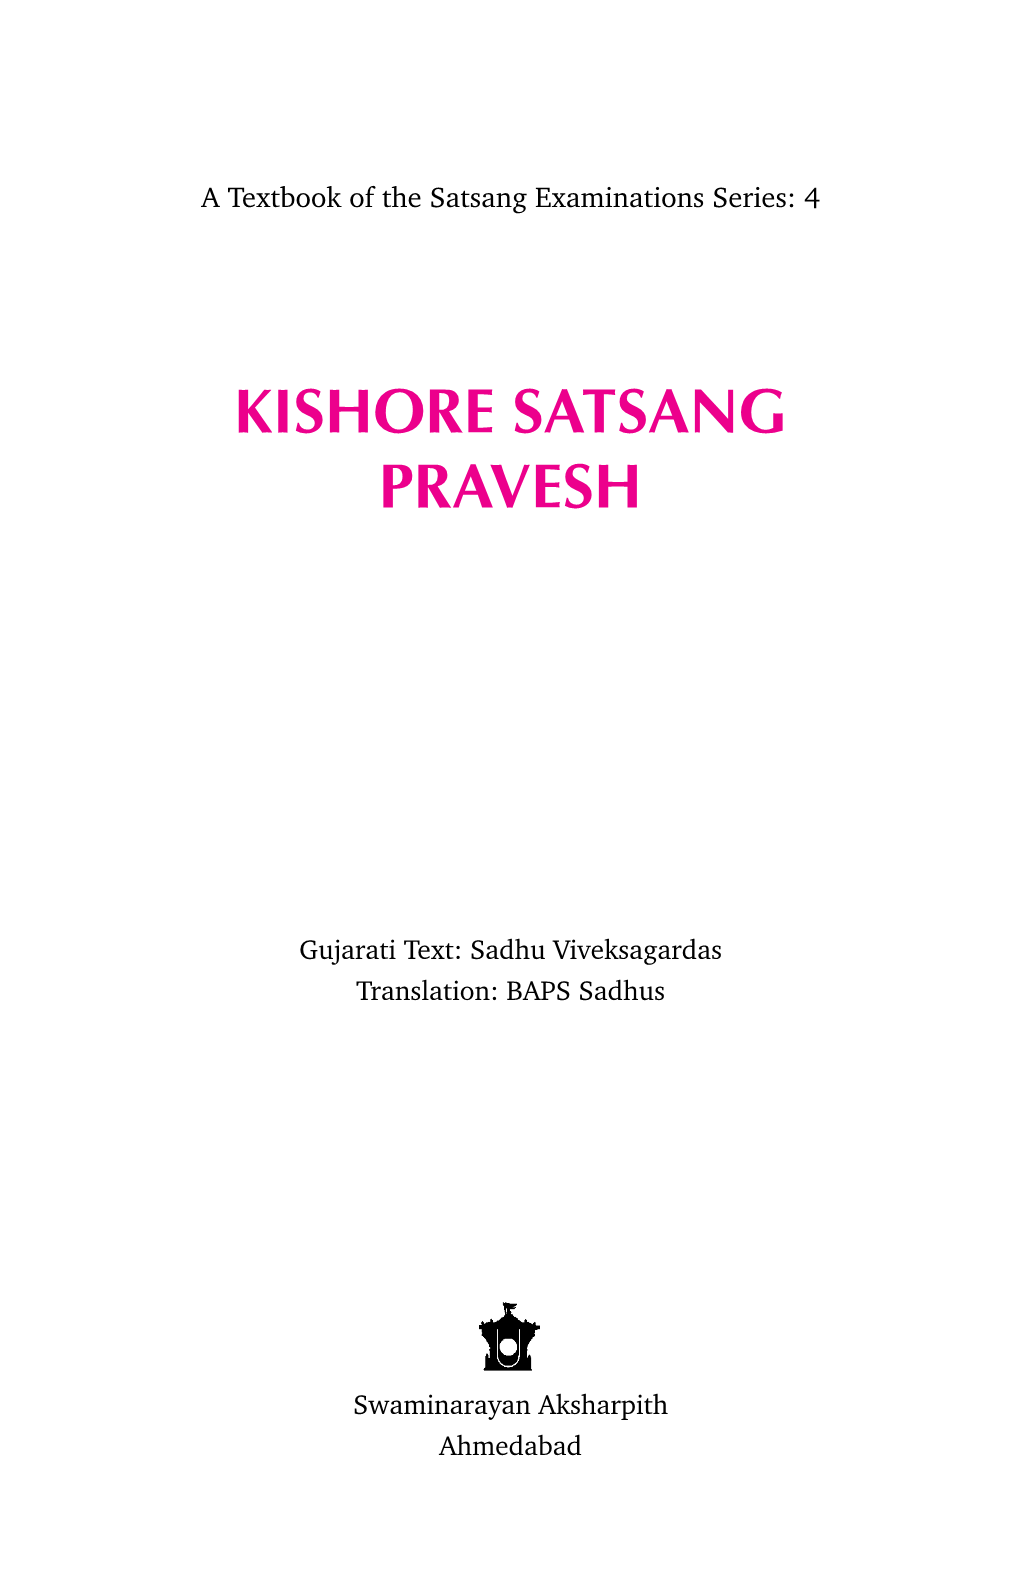 KISHORE SATSANG Pravesh